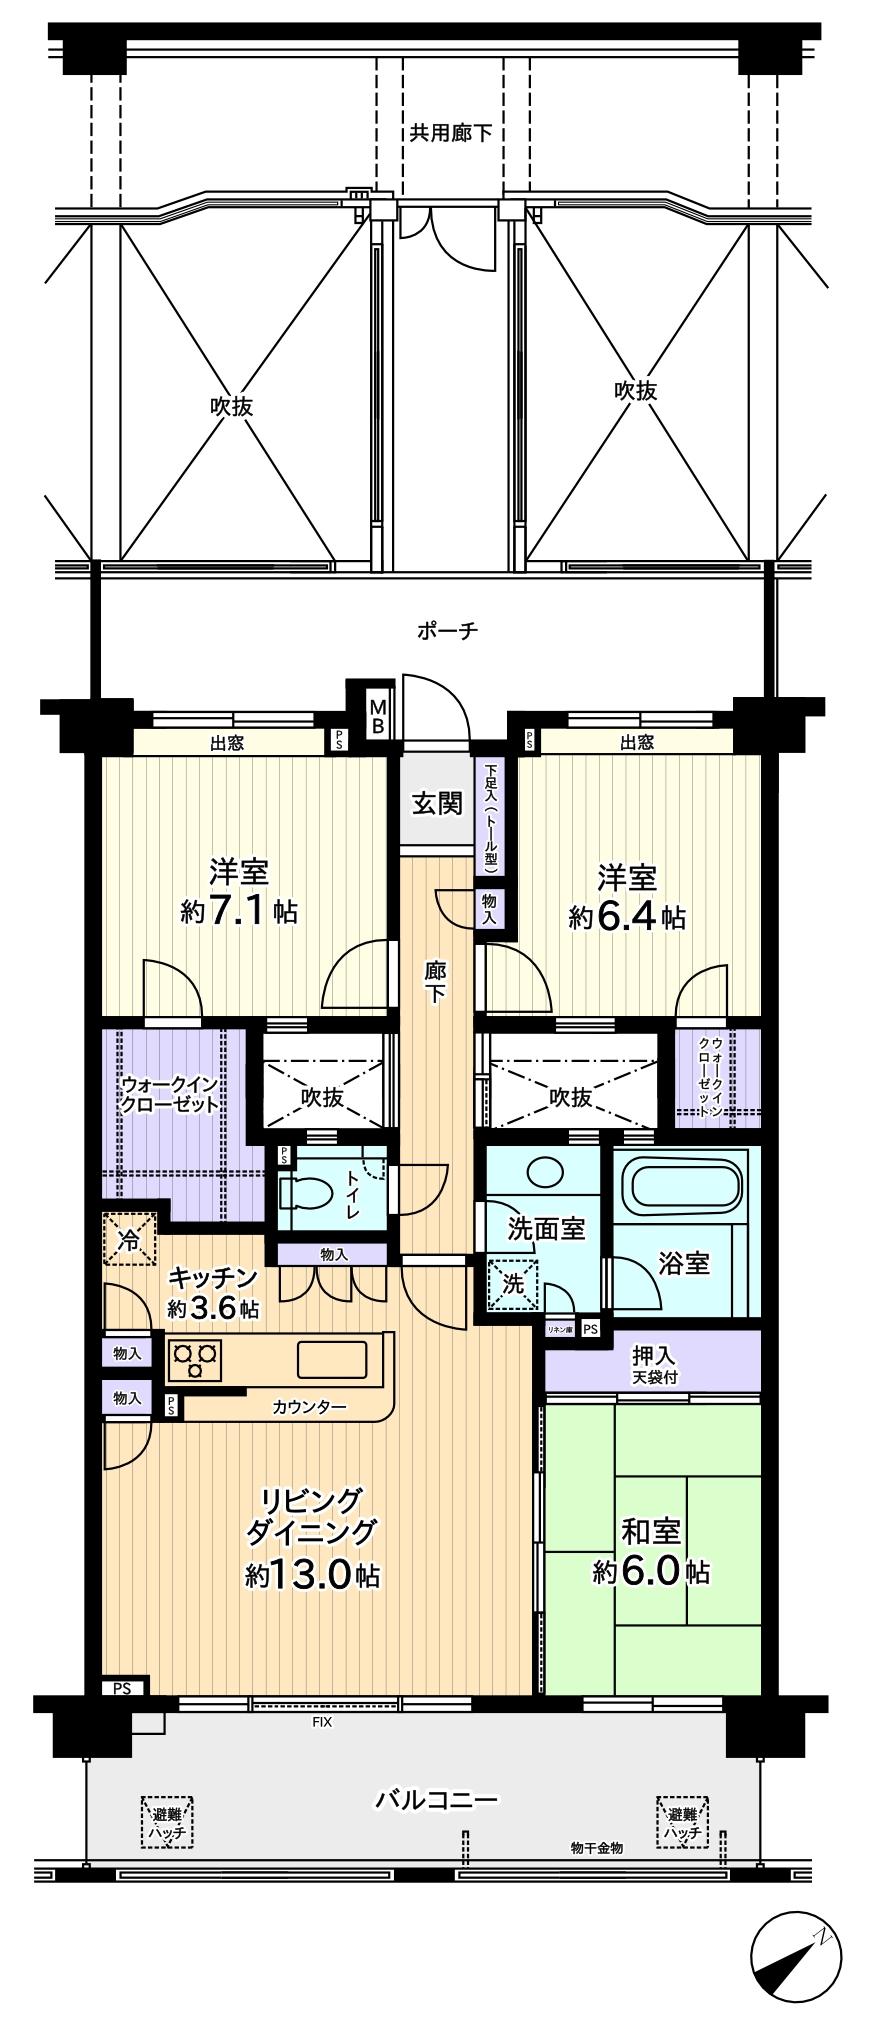 Floor plan. 3LDK, Price 26,800,000 yen, Occupied area 85.17 sq m , Balcony area 15.9 sq m